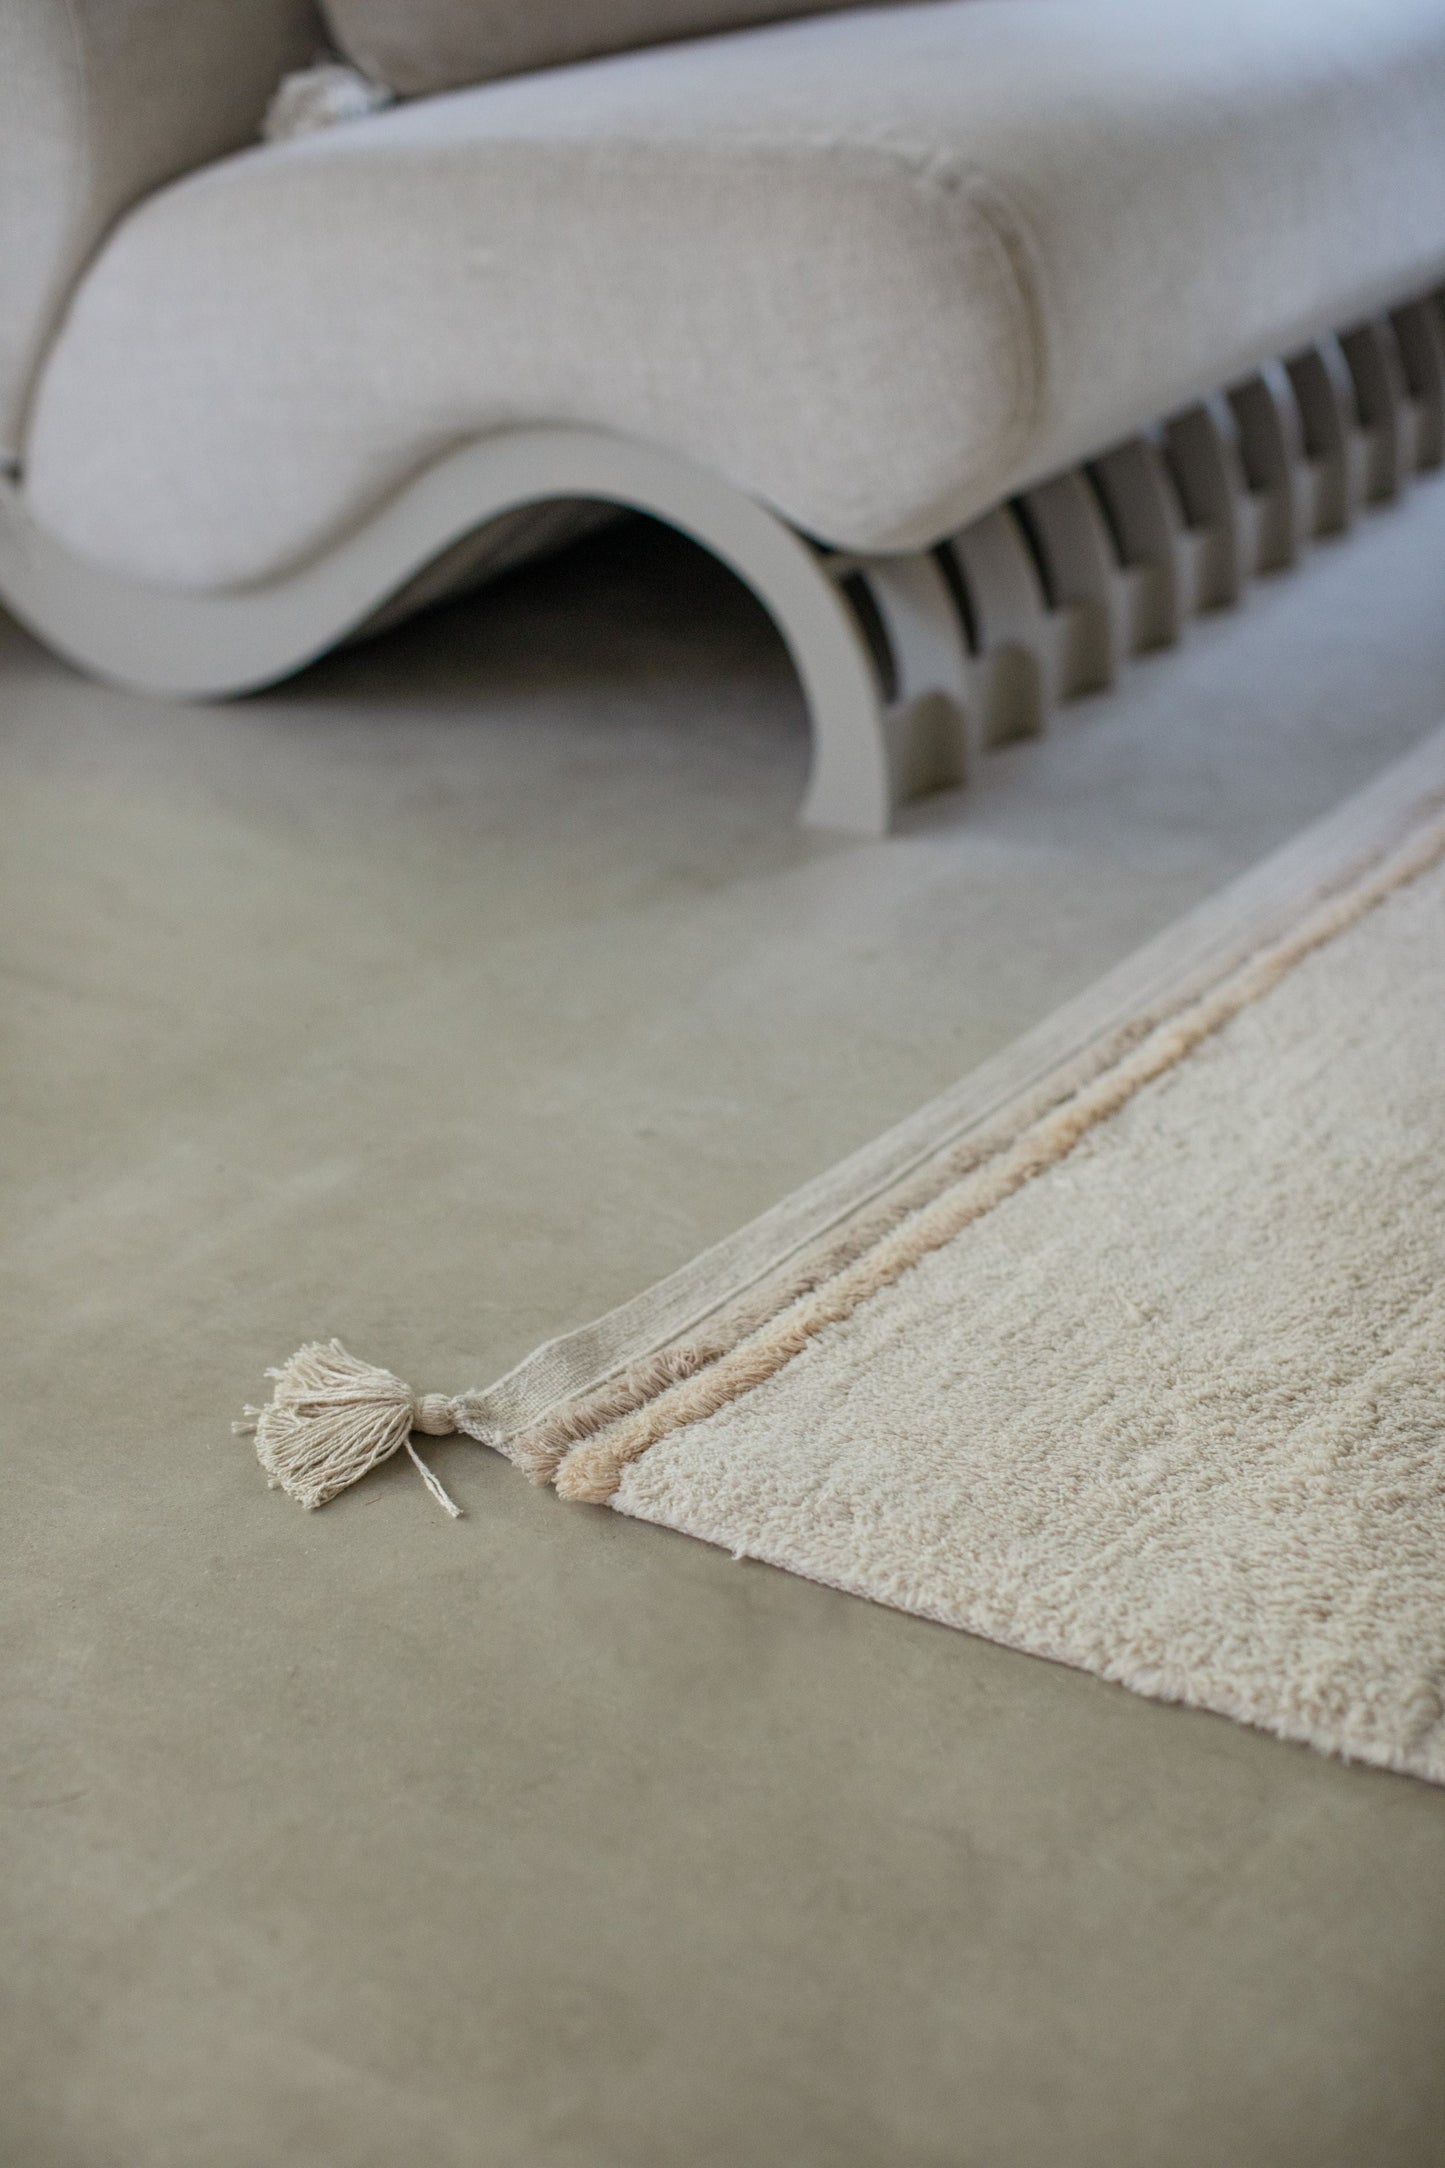 Lorena Canals Washable cotton rug - Bloom Natural L - 170x240cm